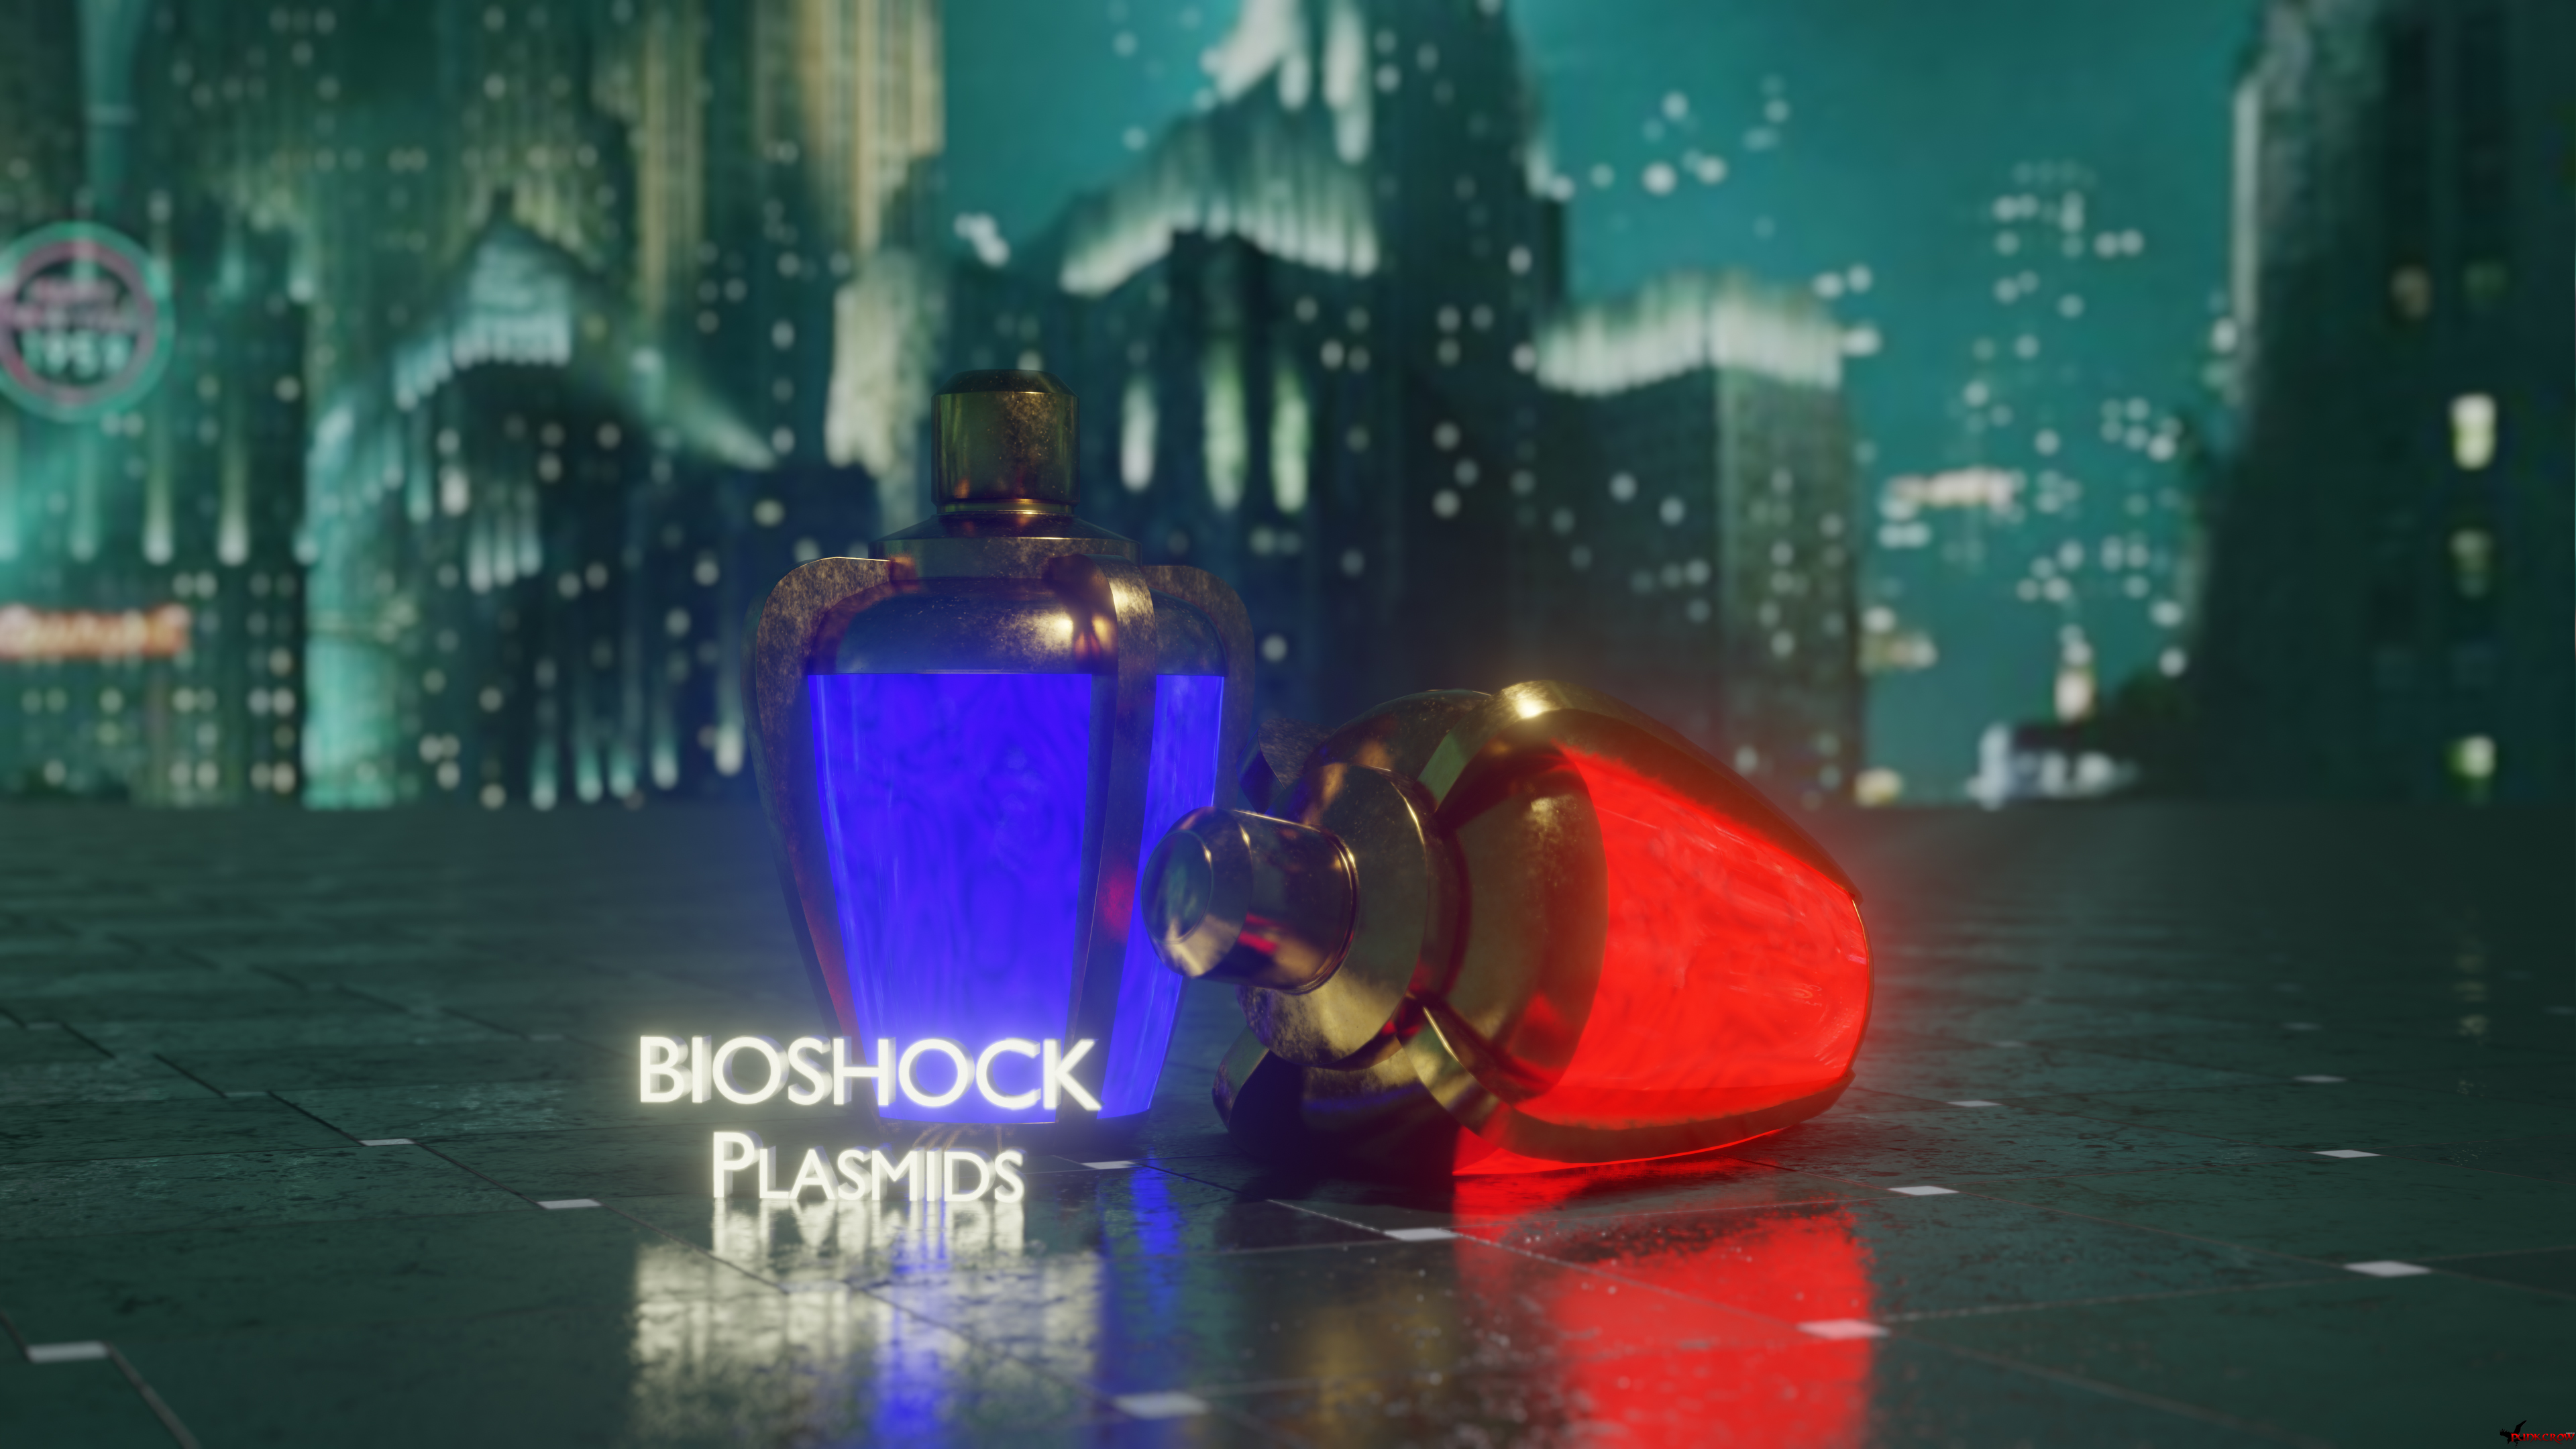 General 3840x2160 BioShock plasmid glowing lights reflection Blender tiles video game art digital art CGI video games